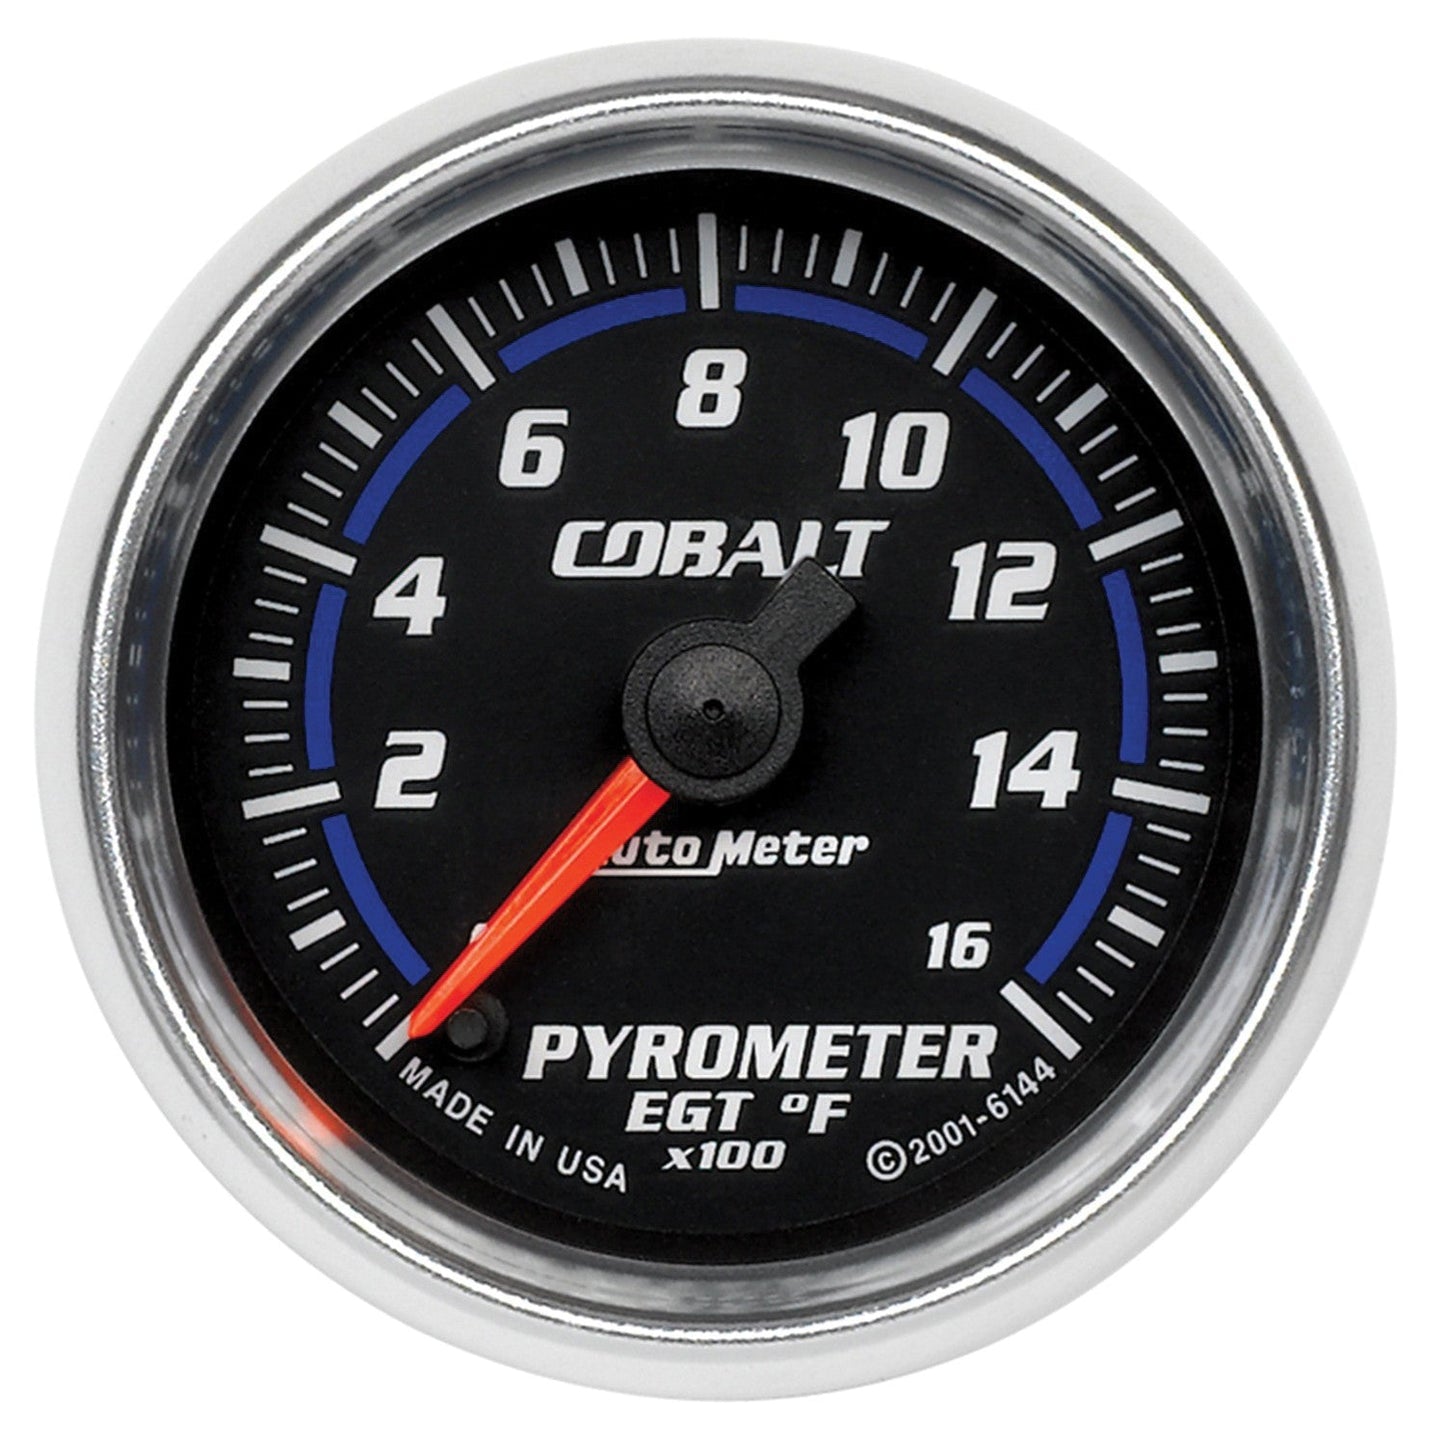 AutoMeter - PIRÓMETRO DE 2-1/16", 0-1600 °F, MOTOR PASO A PASO, COBALTO (6144) 